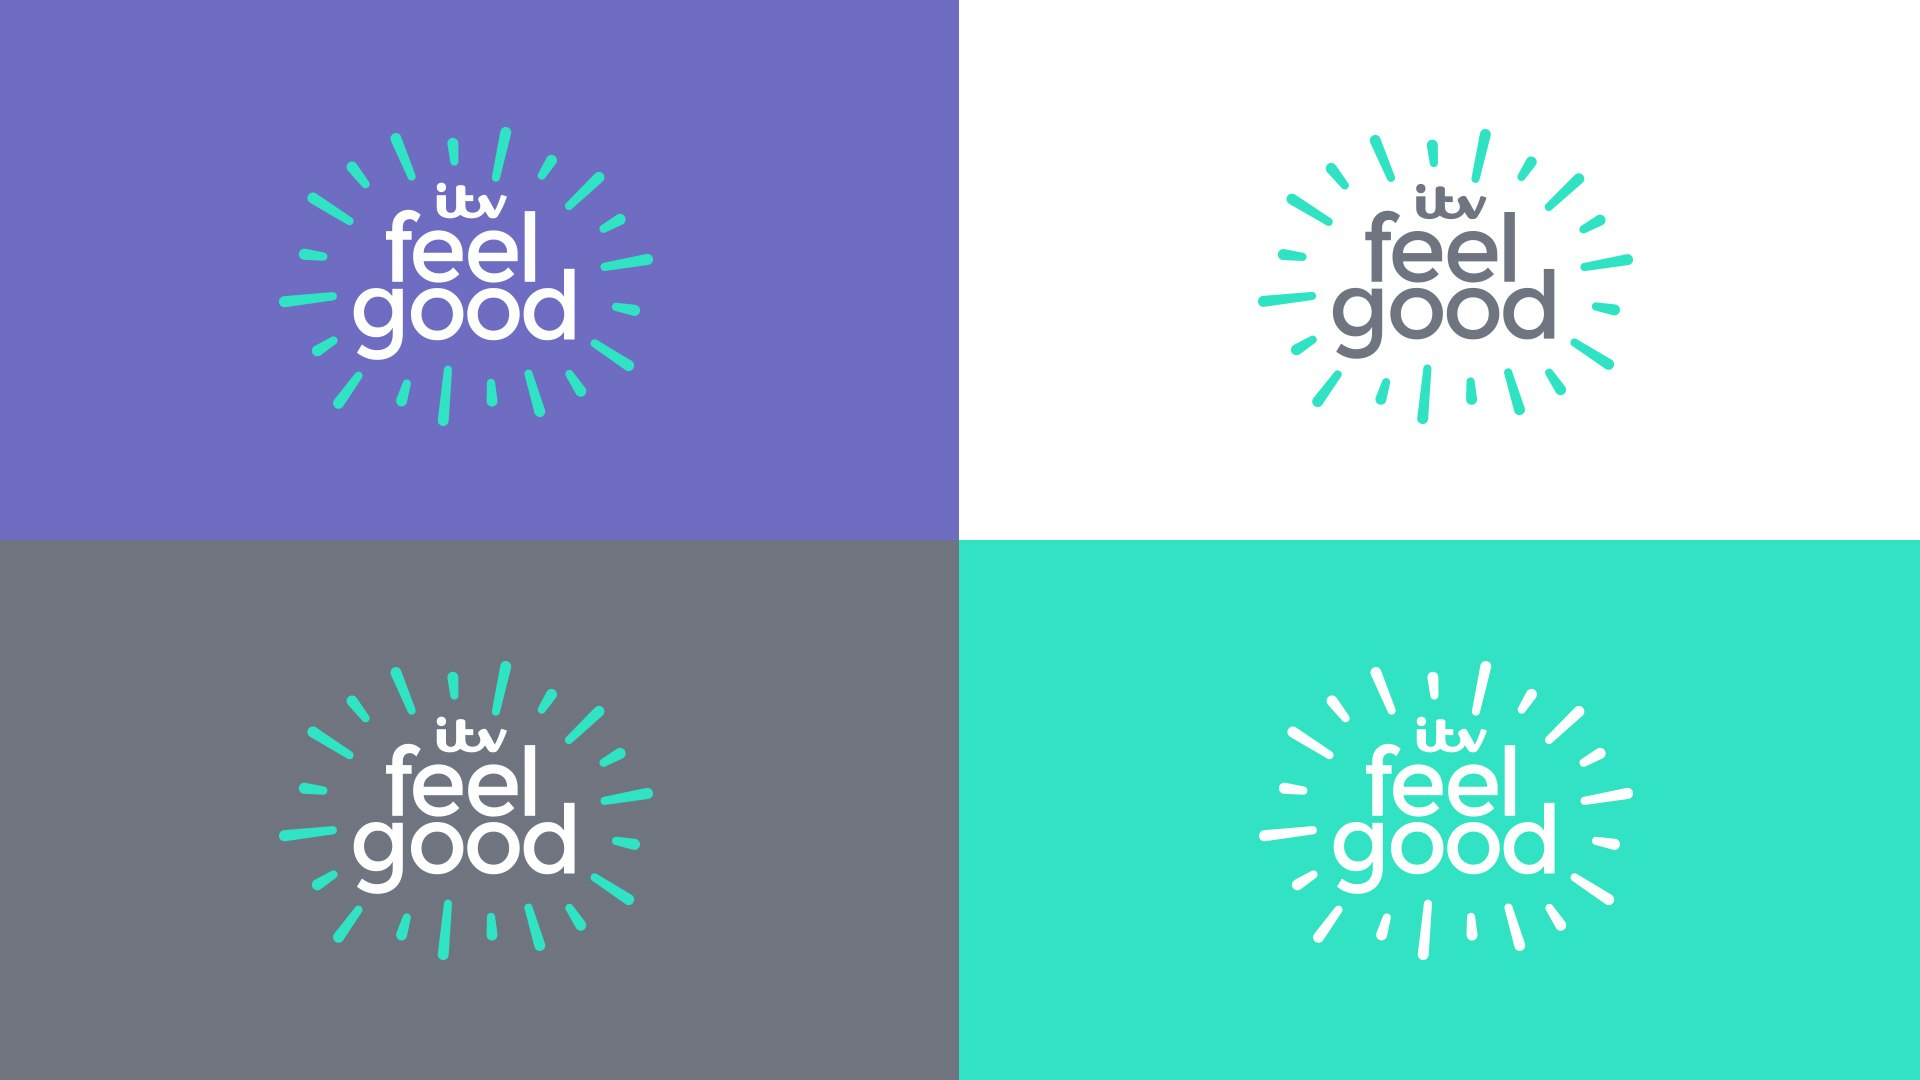 Jason Ford - ITV Feel Good Logos